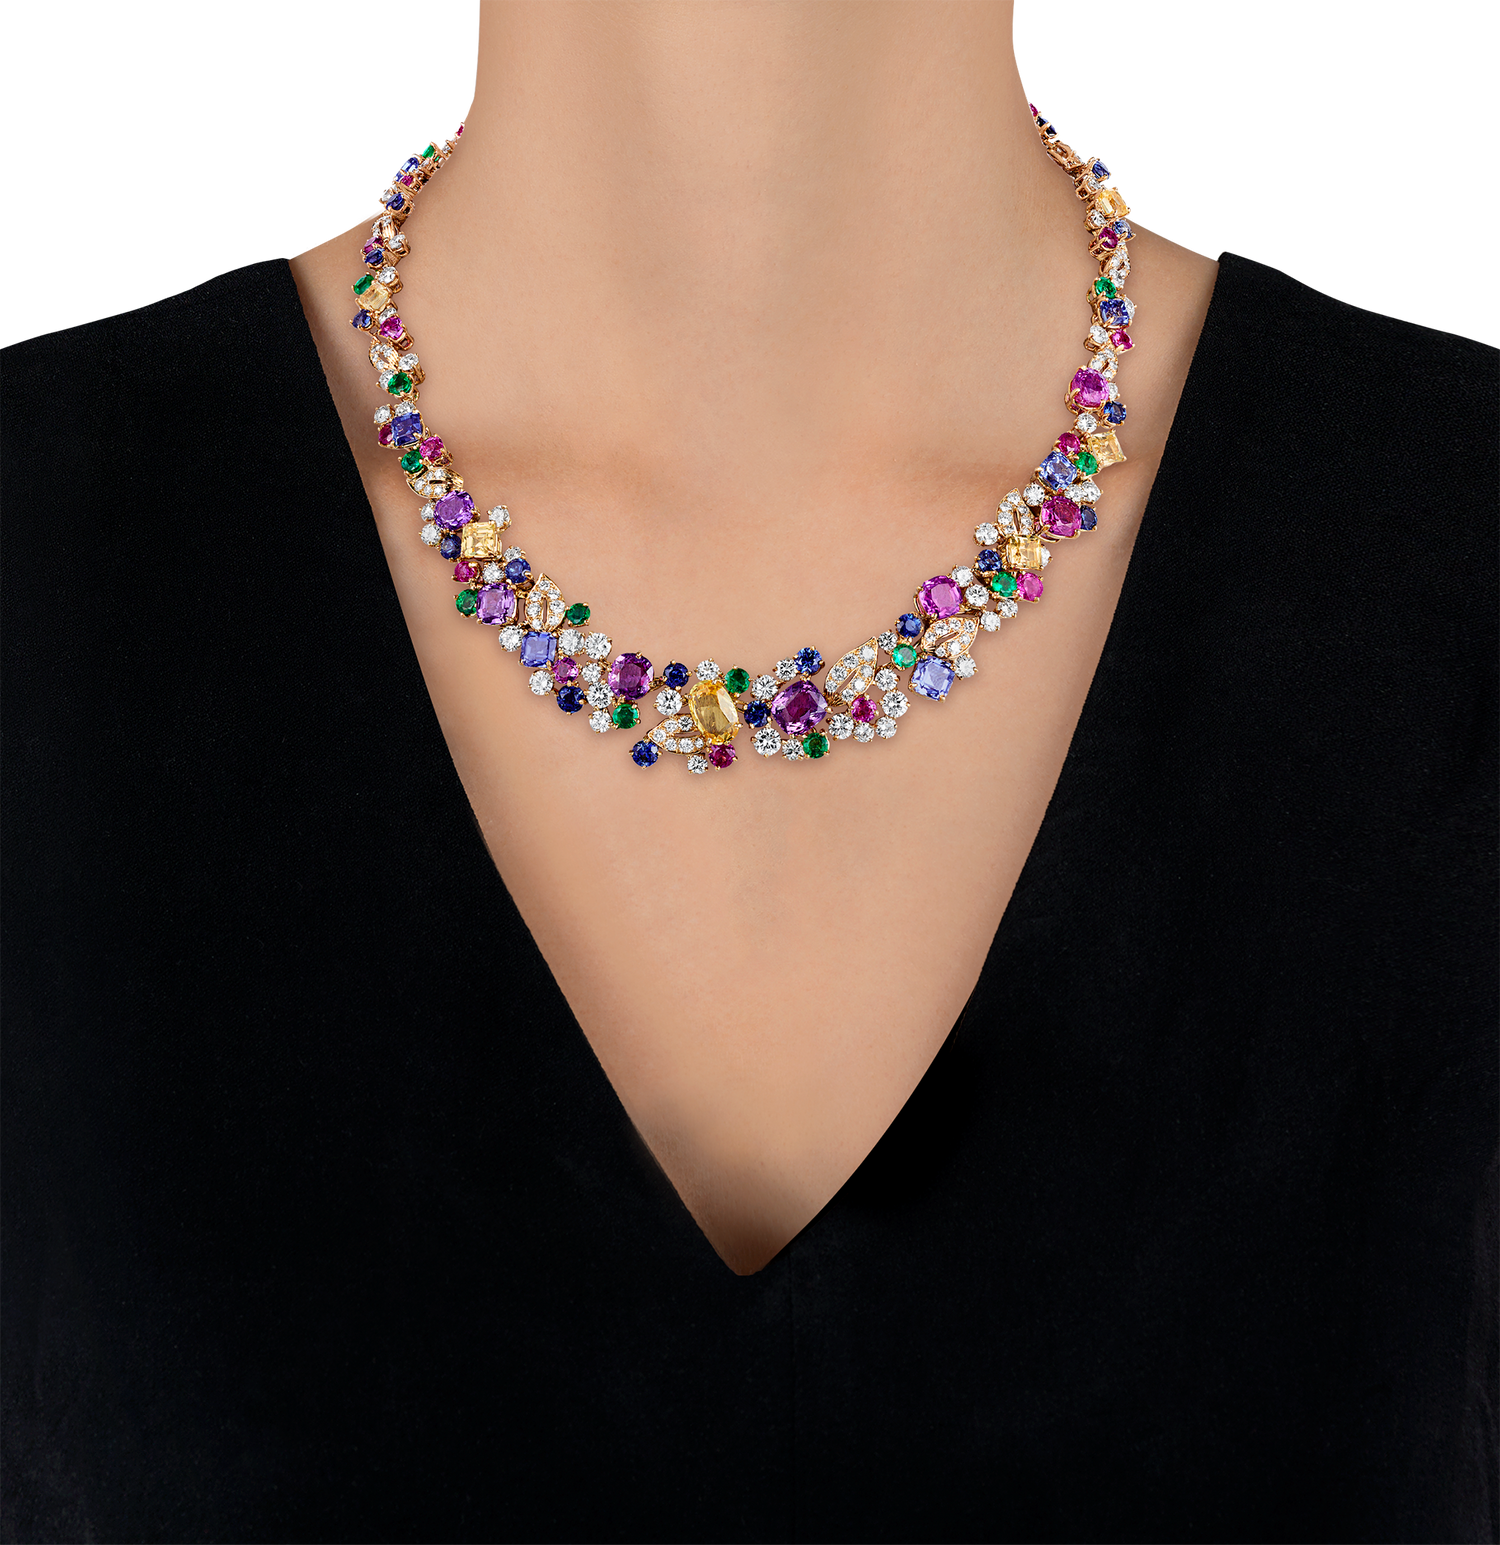 Oscar Heyman Diamond, Sapphire, Emerald and Ruby Necklace